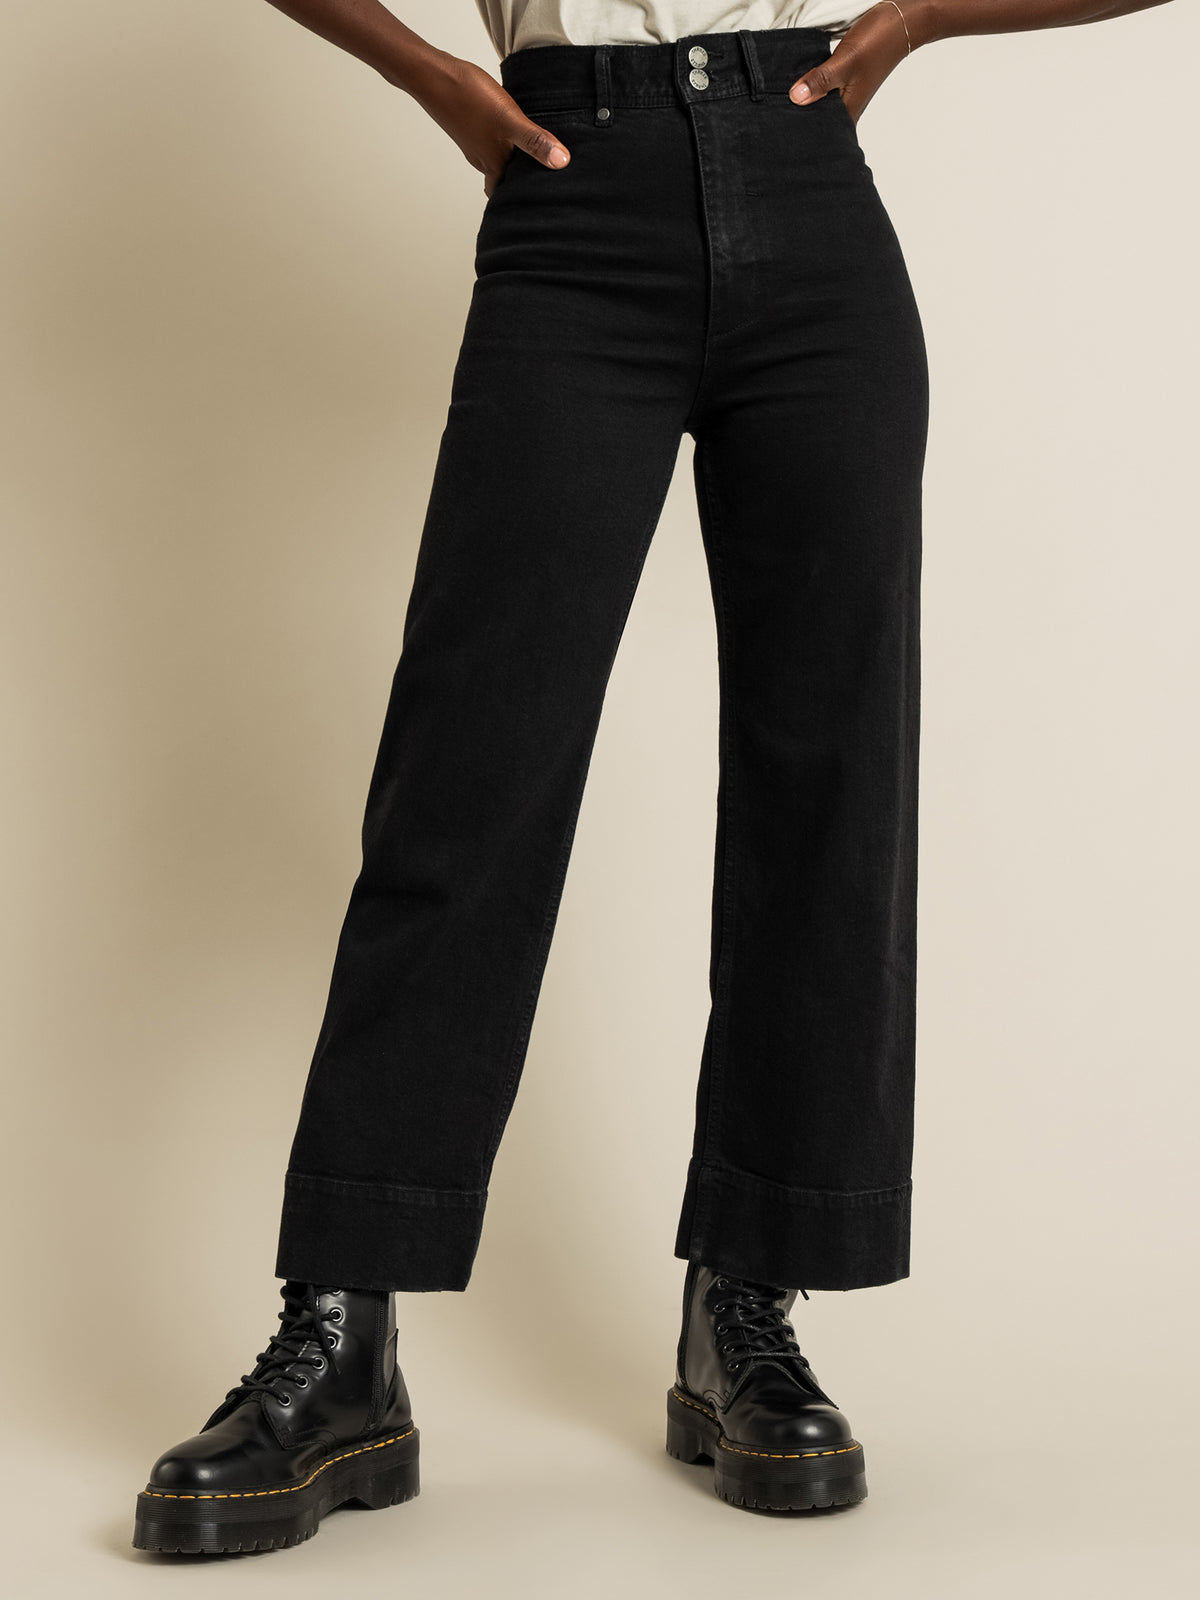 Belle Stretch Denim Jeans in Black